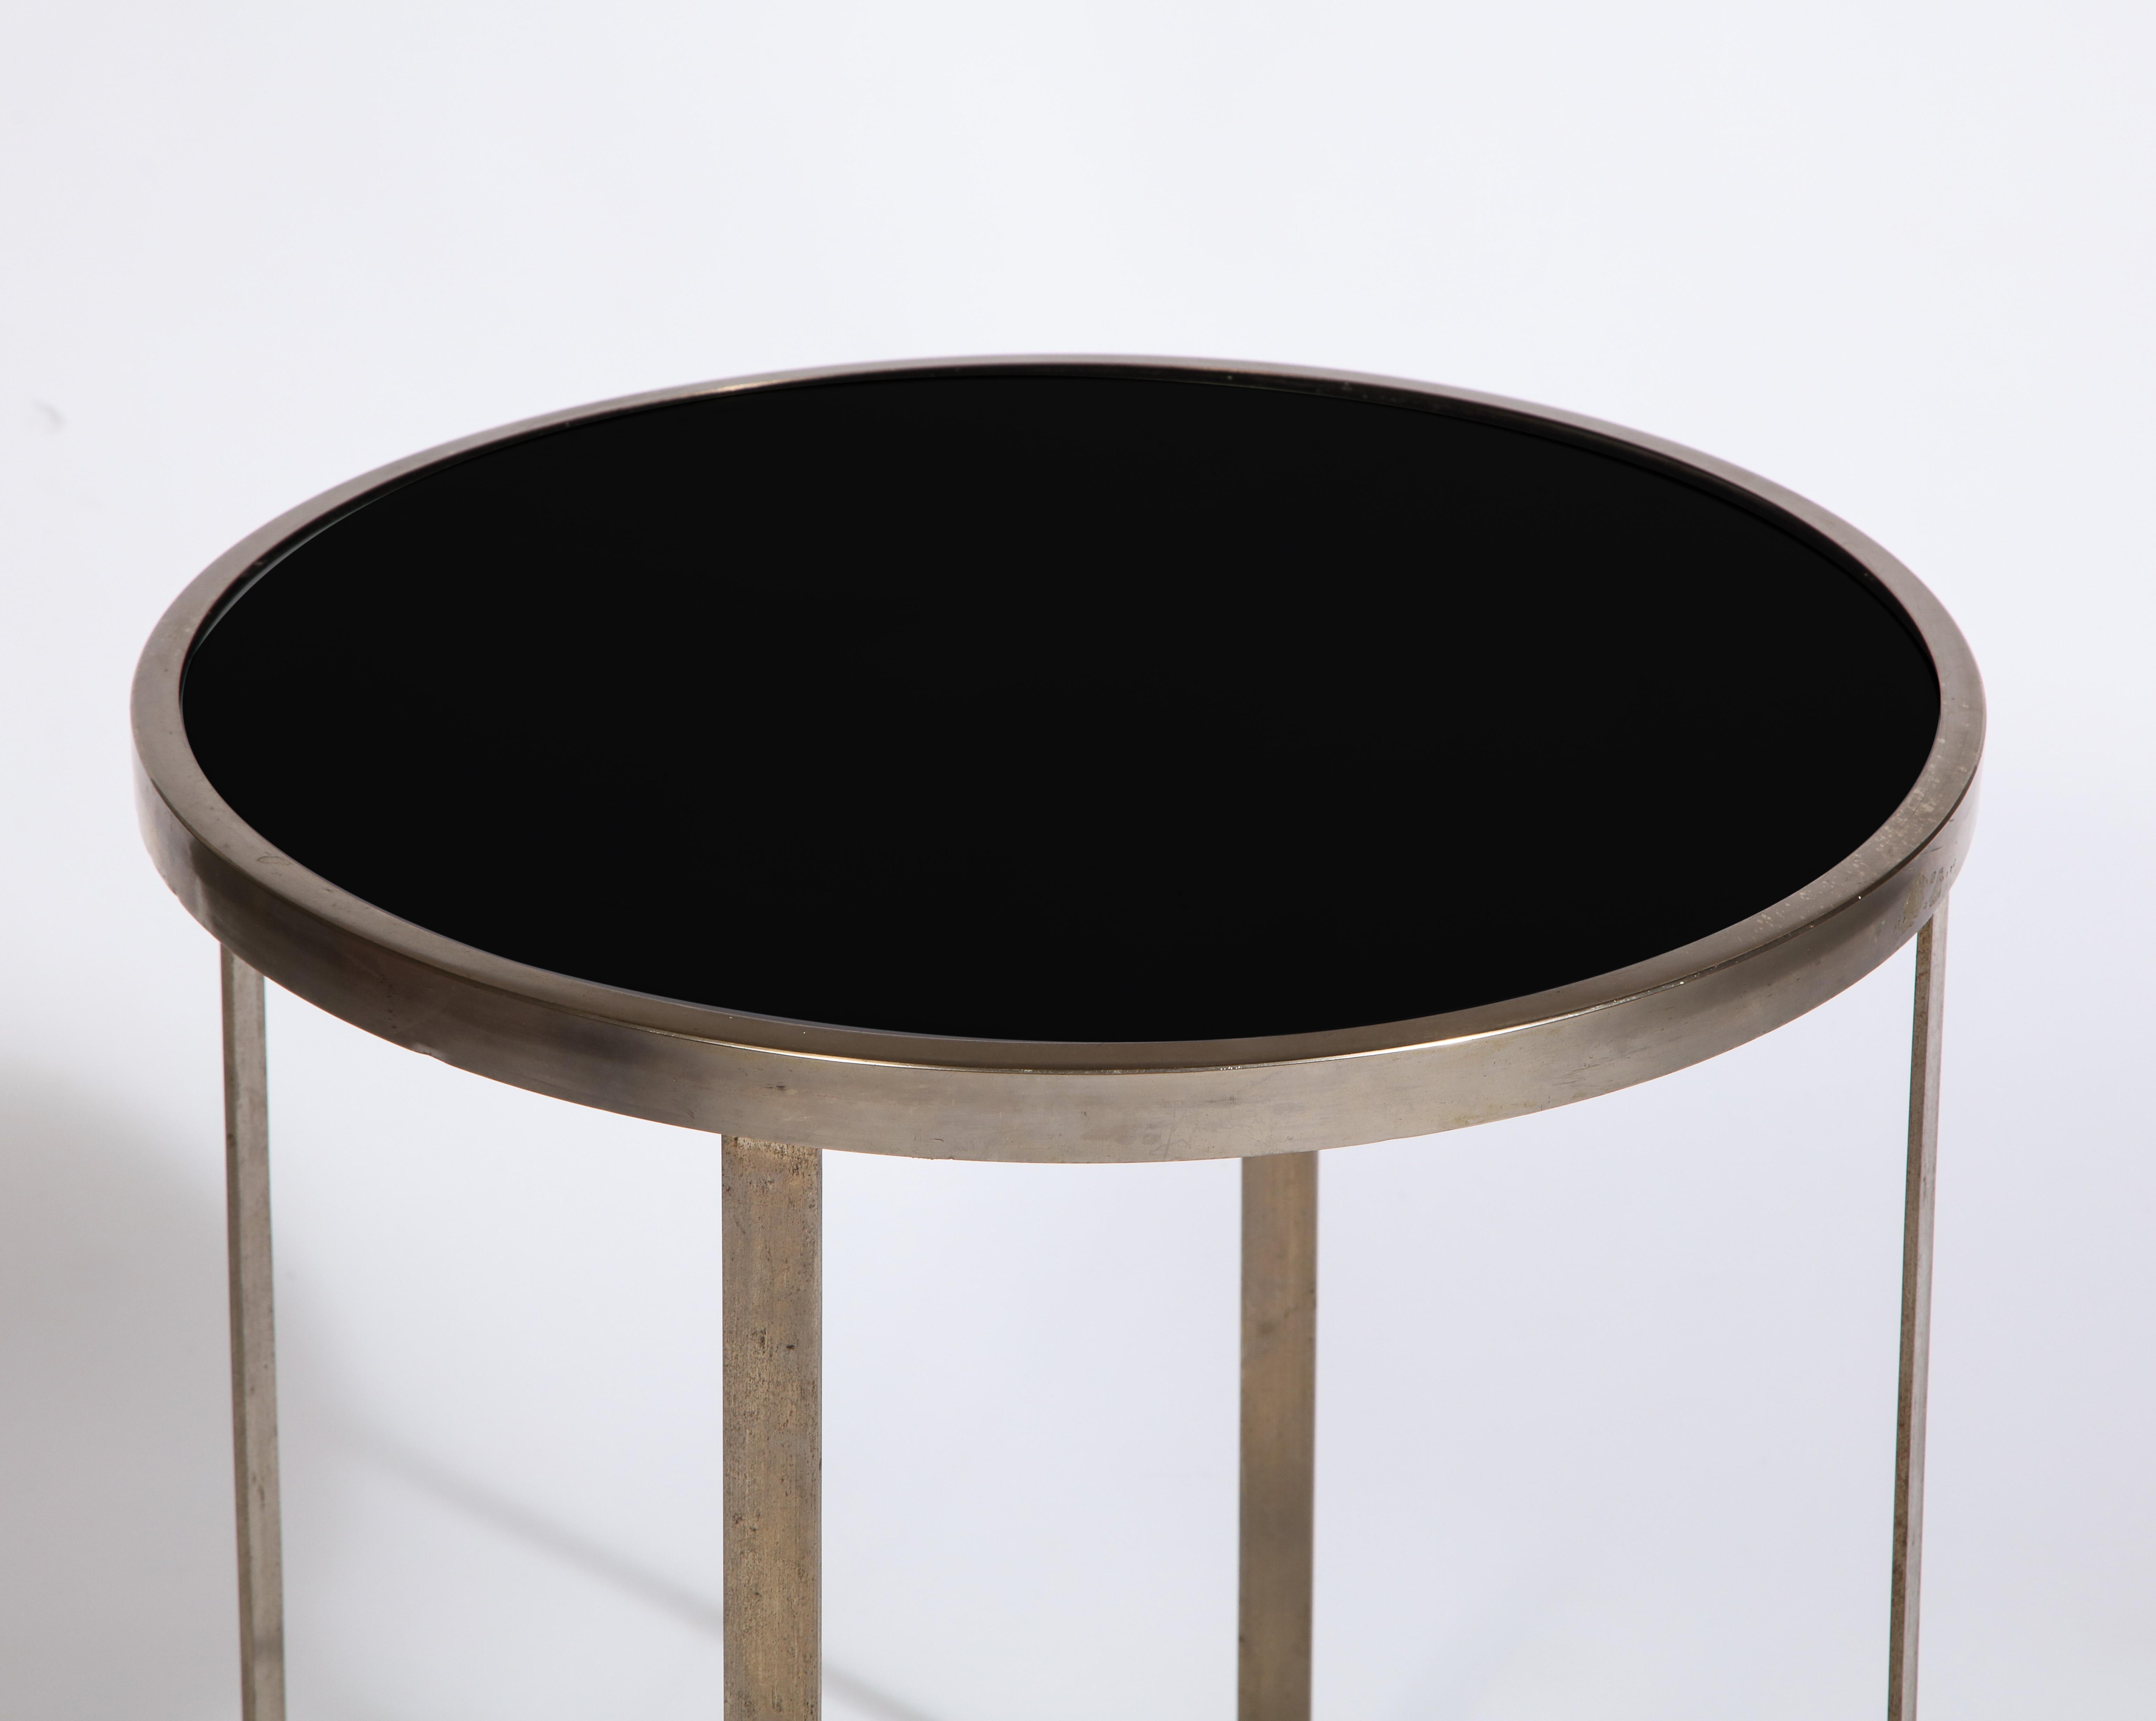 Modernist Art Deco Adnet Attr. Steel Round Black Glass Table, France, 1930s For Sale 1